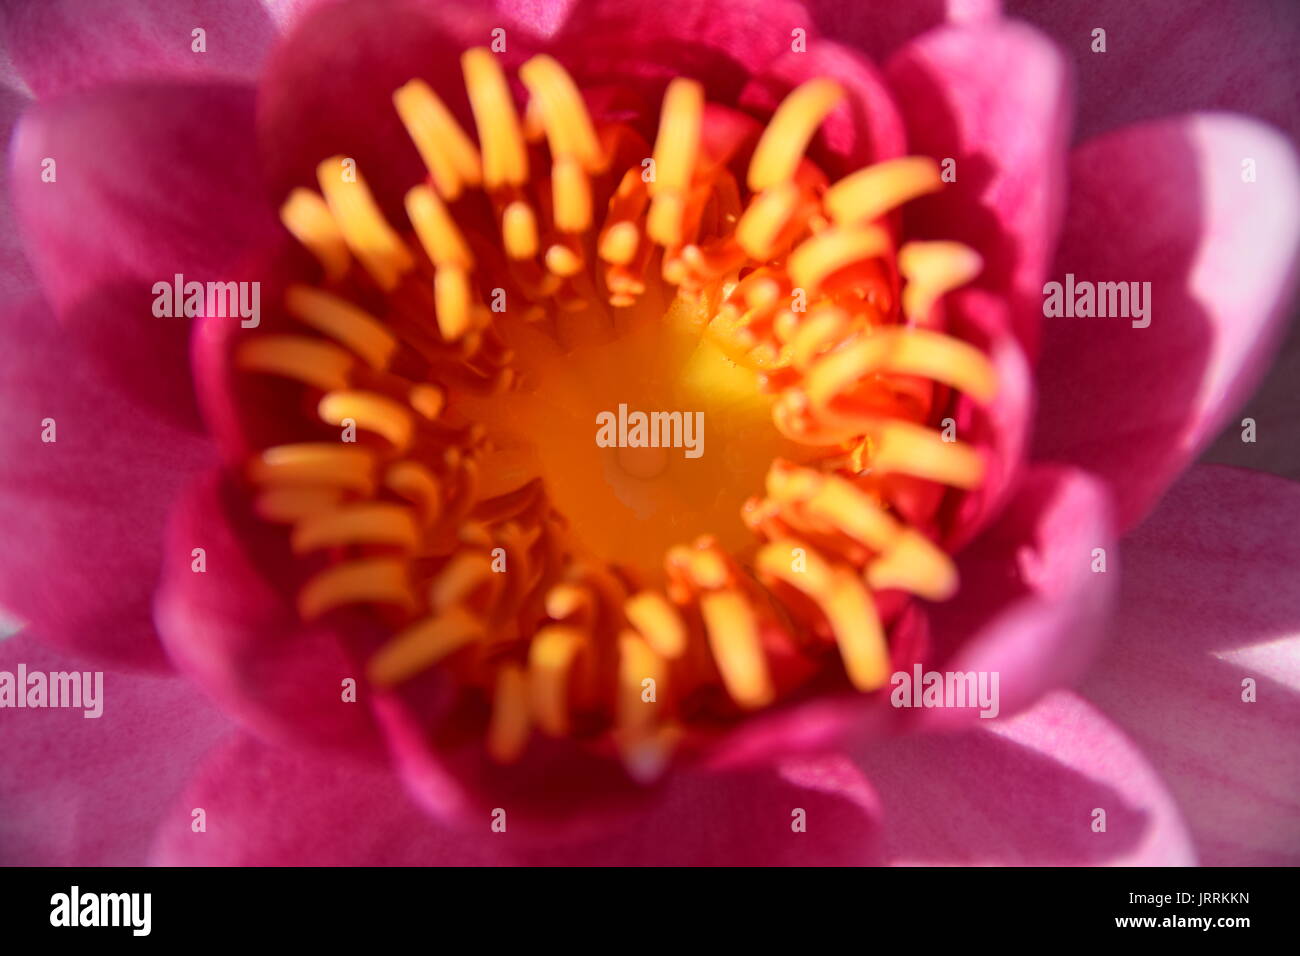 Nymphaea Pink, Pink water lily, pink lotus Stock Photo